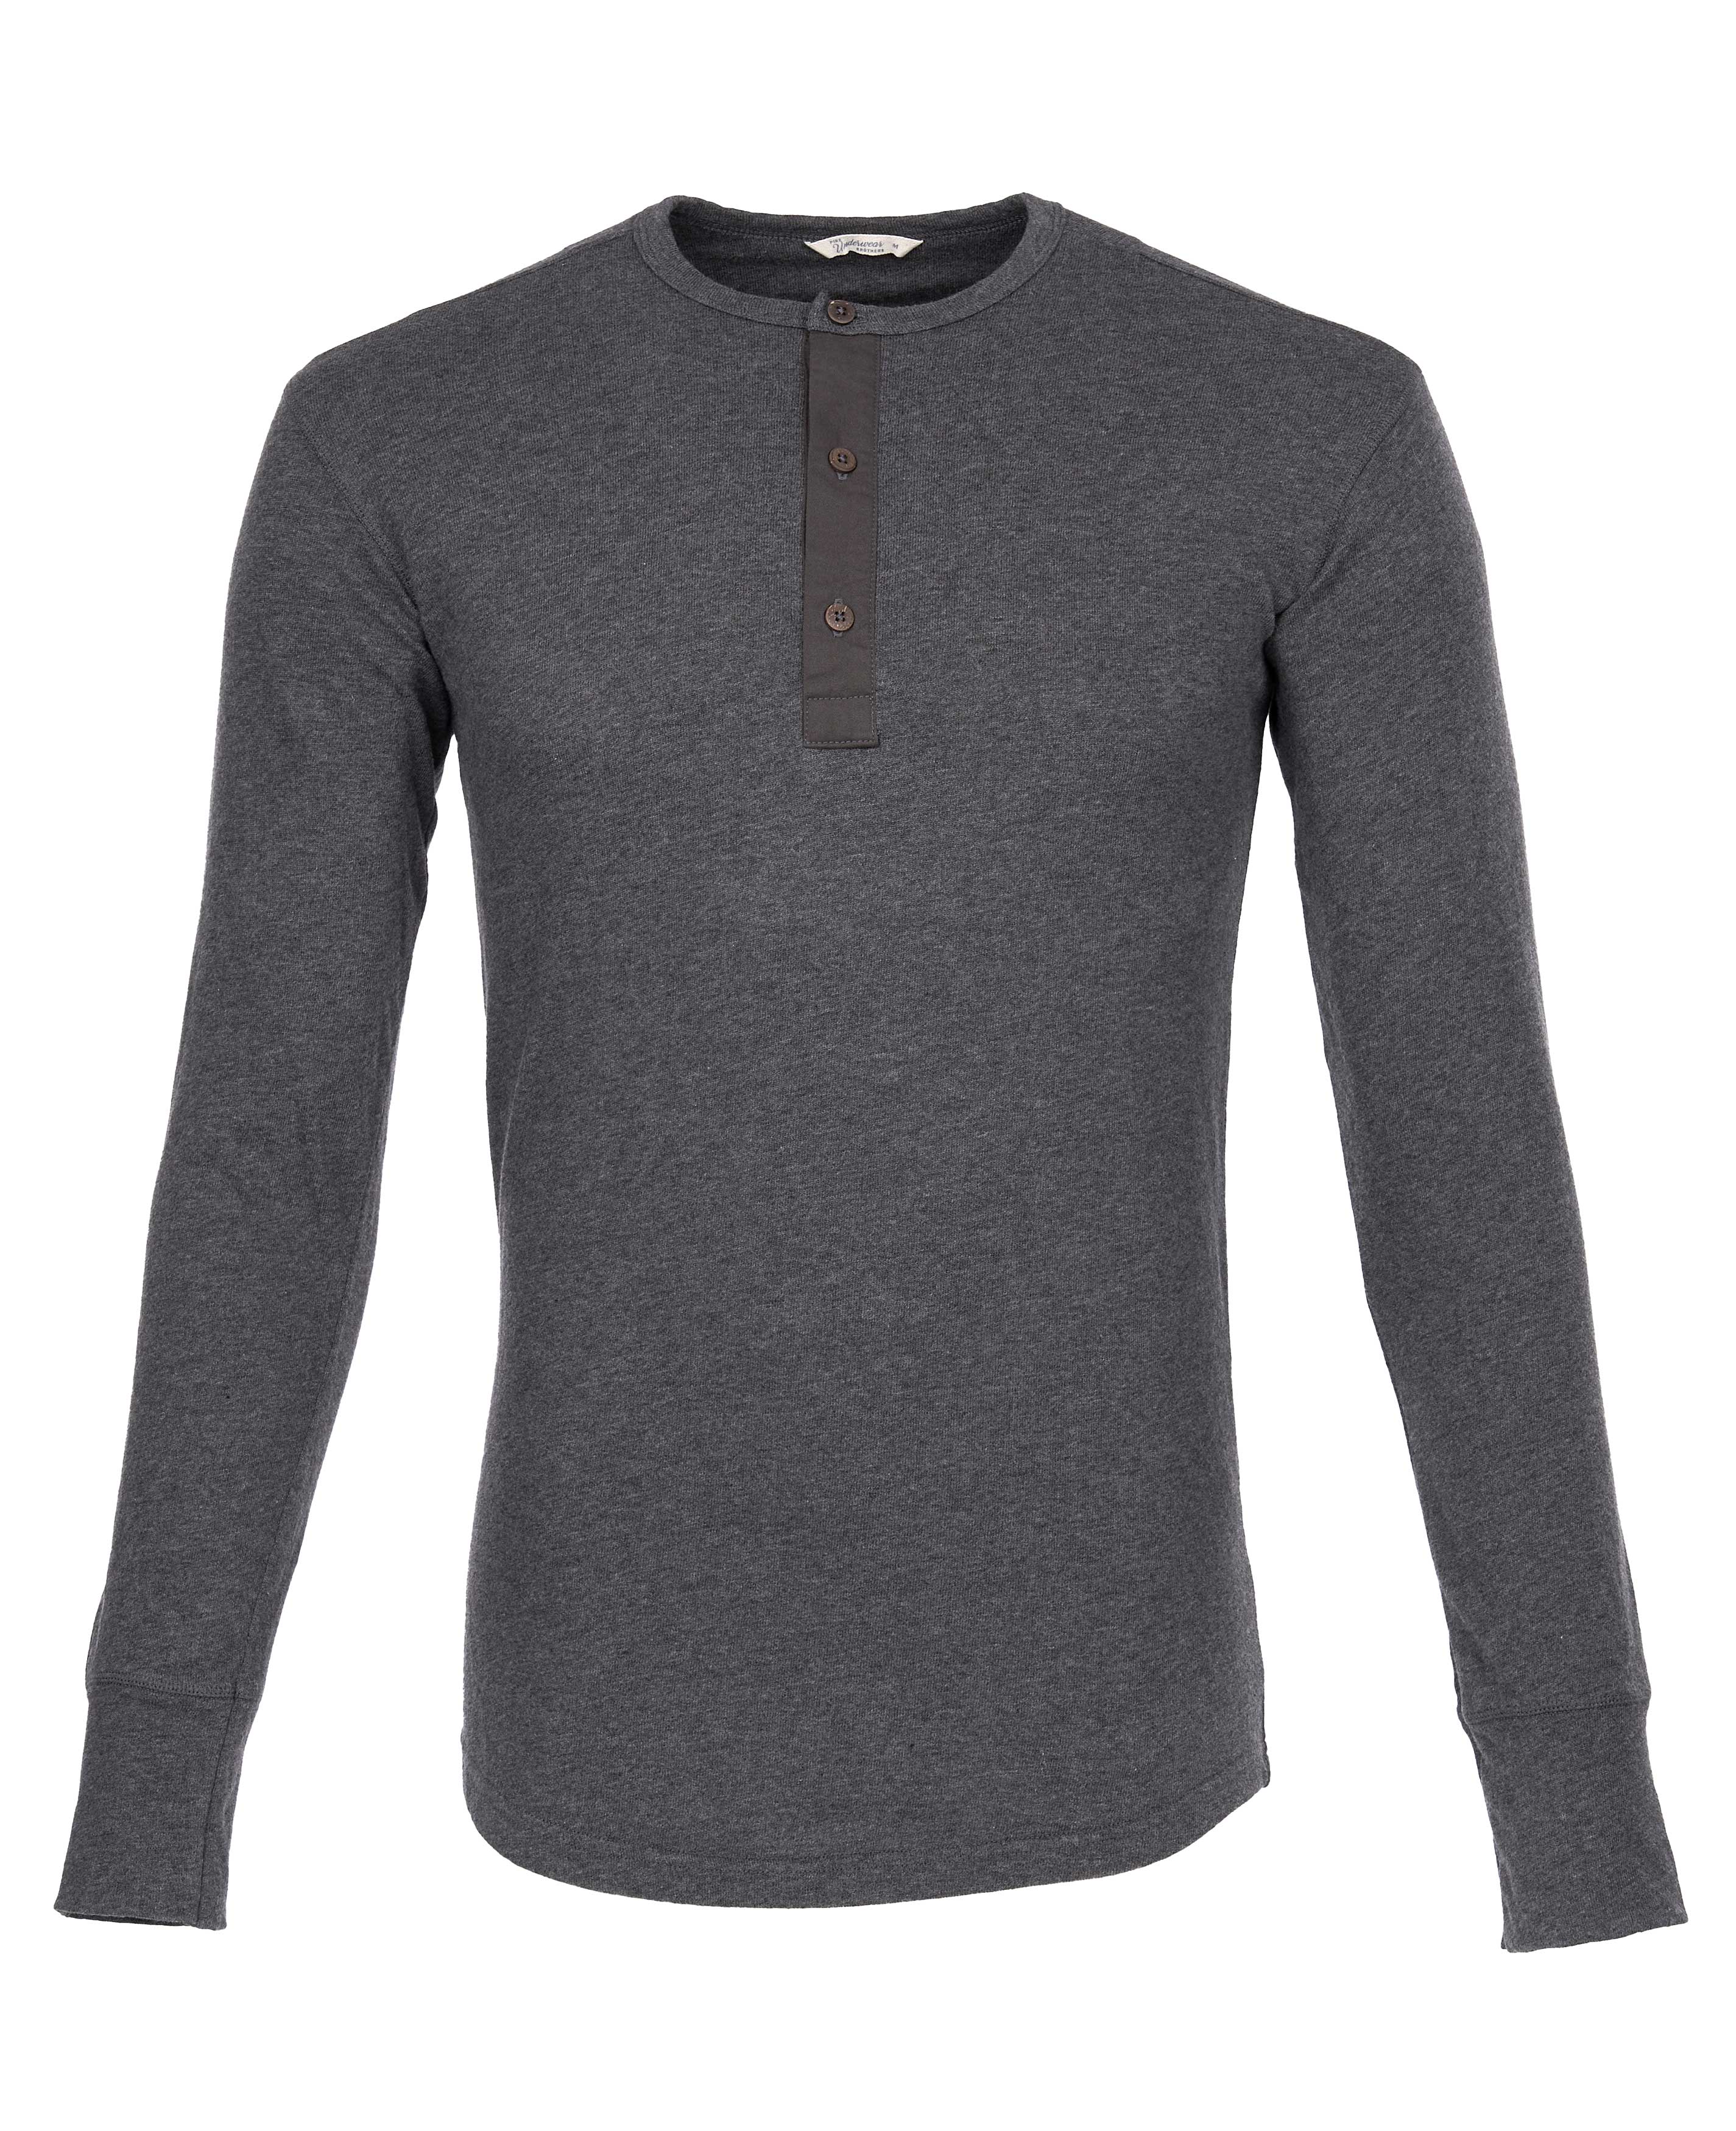 1927 Henley Shirt Long Sleeve grey melange